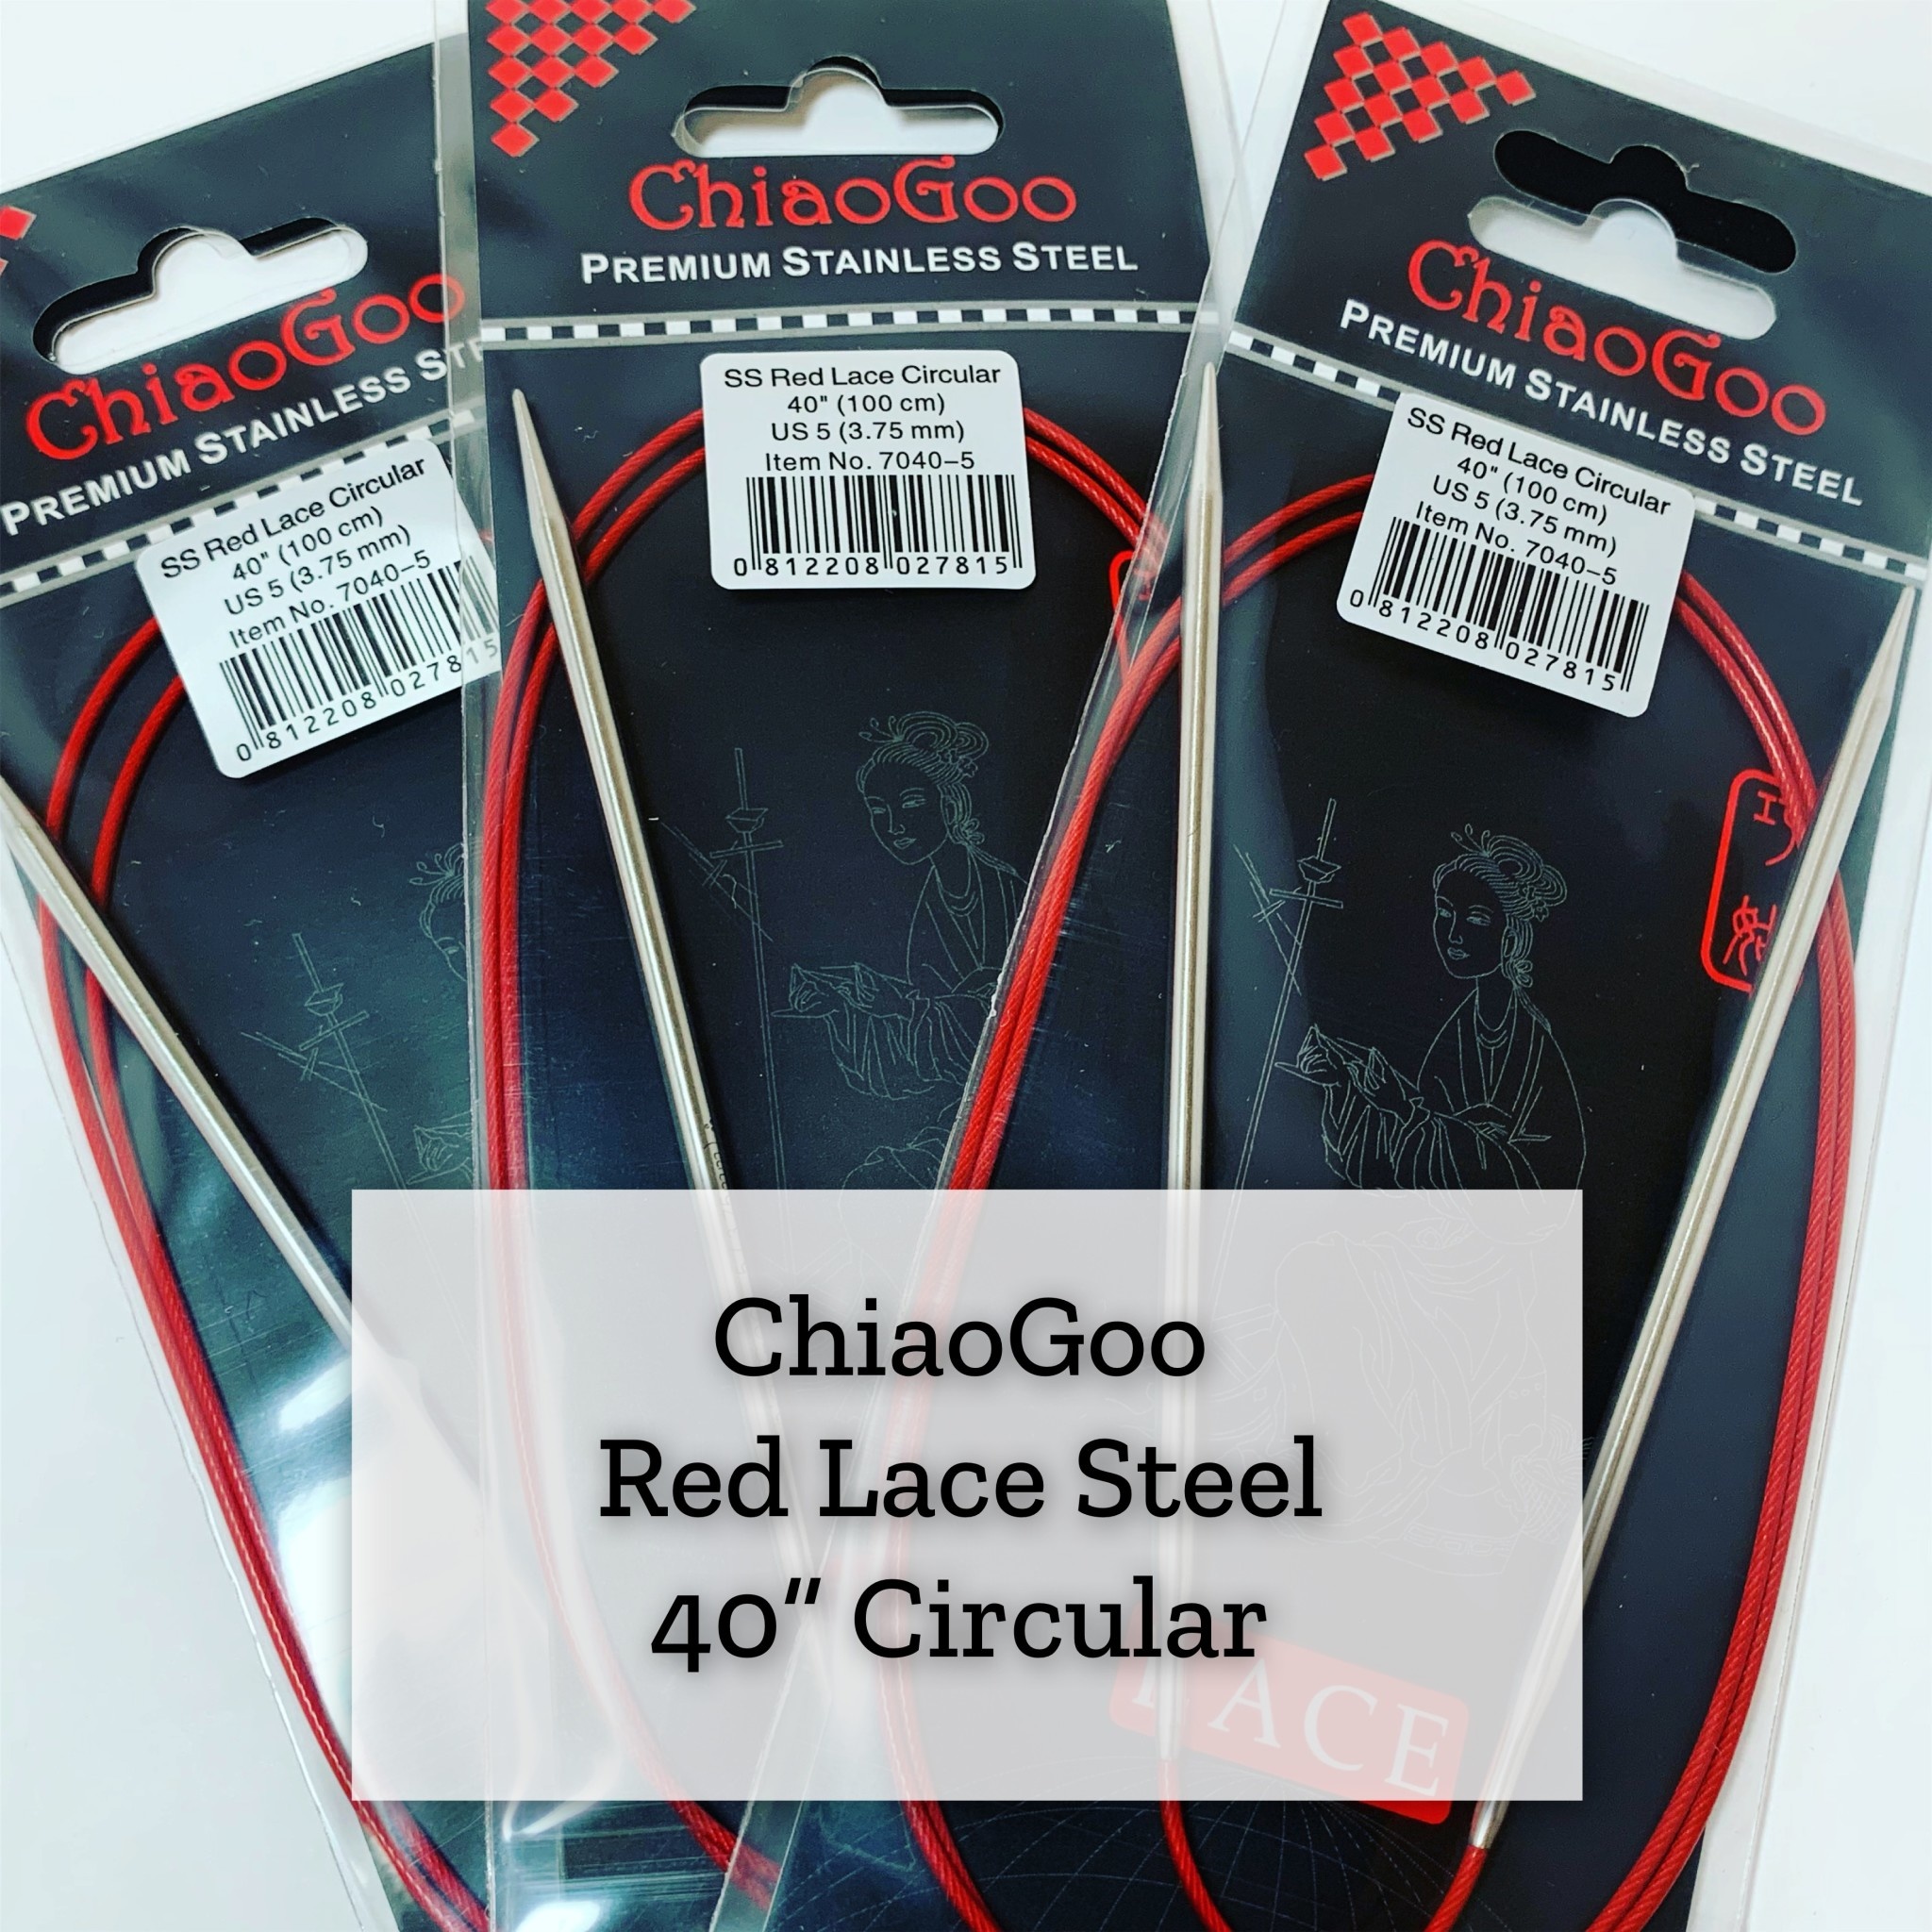 ChiaoGoo Red Lace Steel - 40" 5 mm